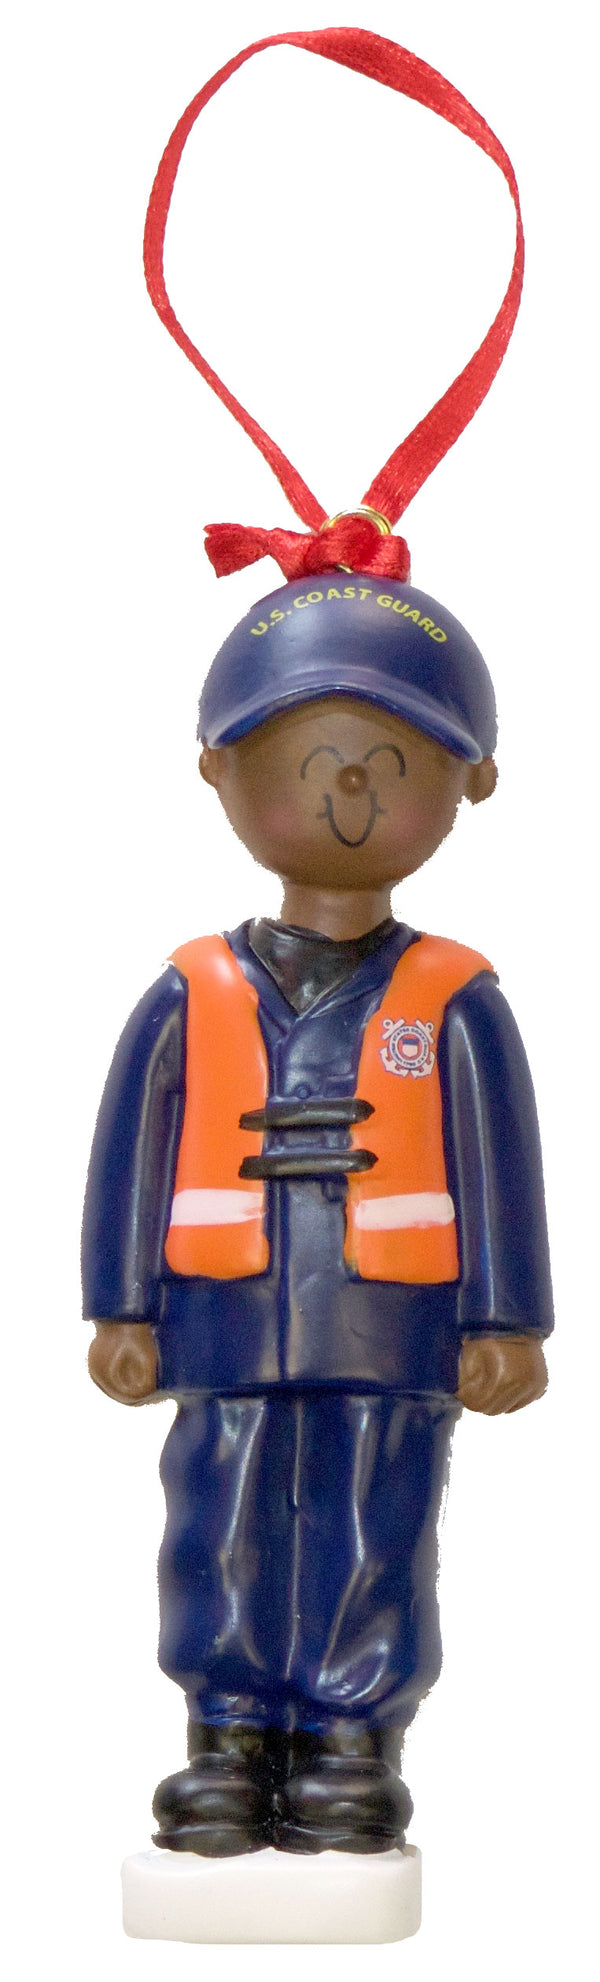 Coast Guard Ornament - Male Figure